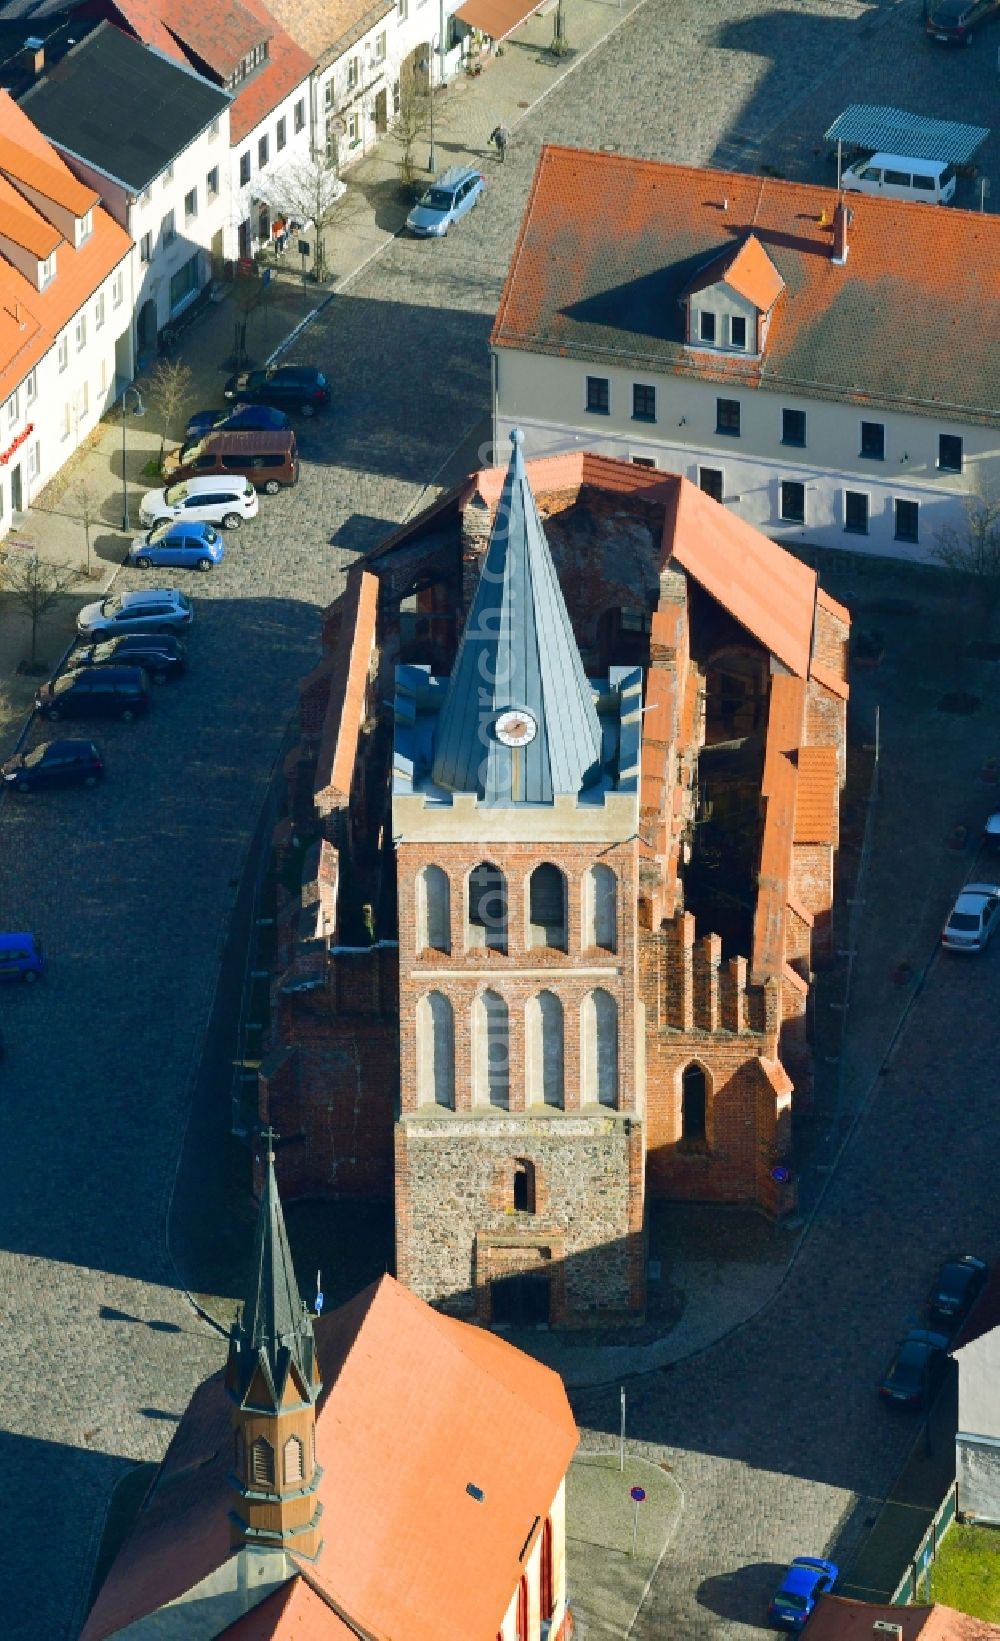 Aerial photograph Lieberose - Ruins of church building on Markt in Lieberose in the state Brandenburg, Germany